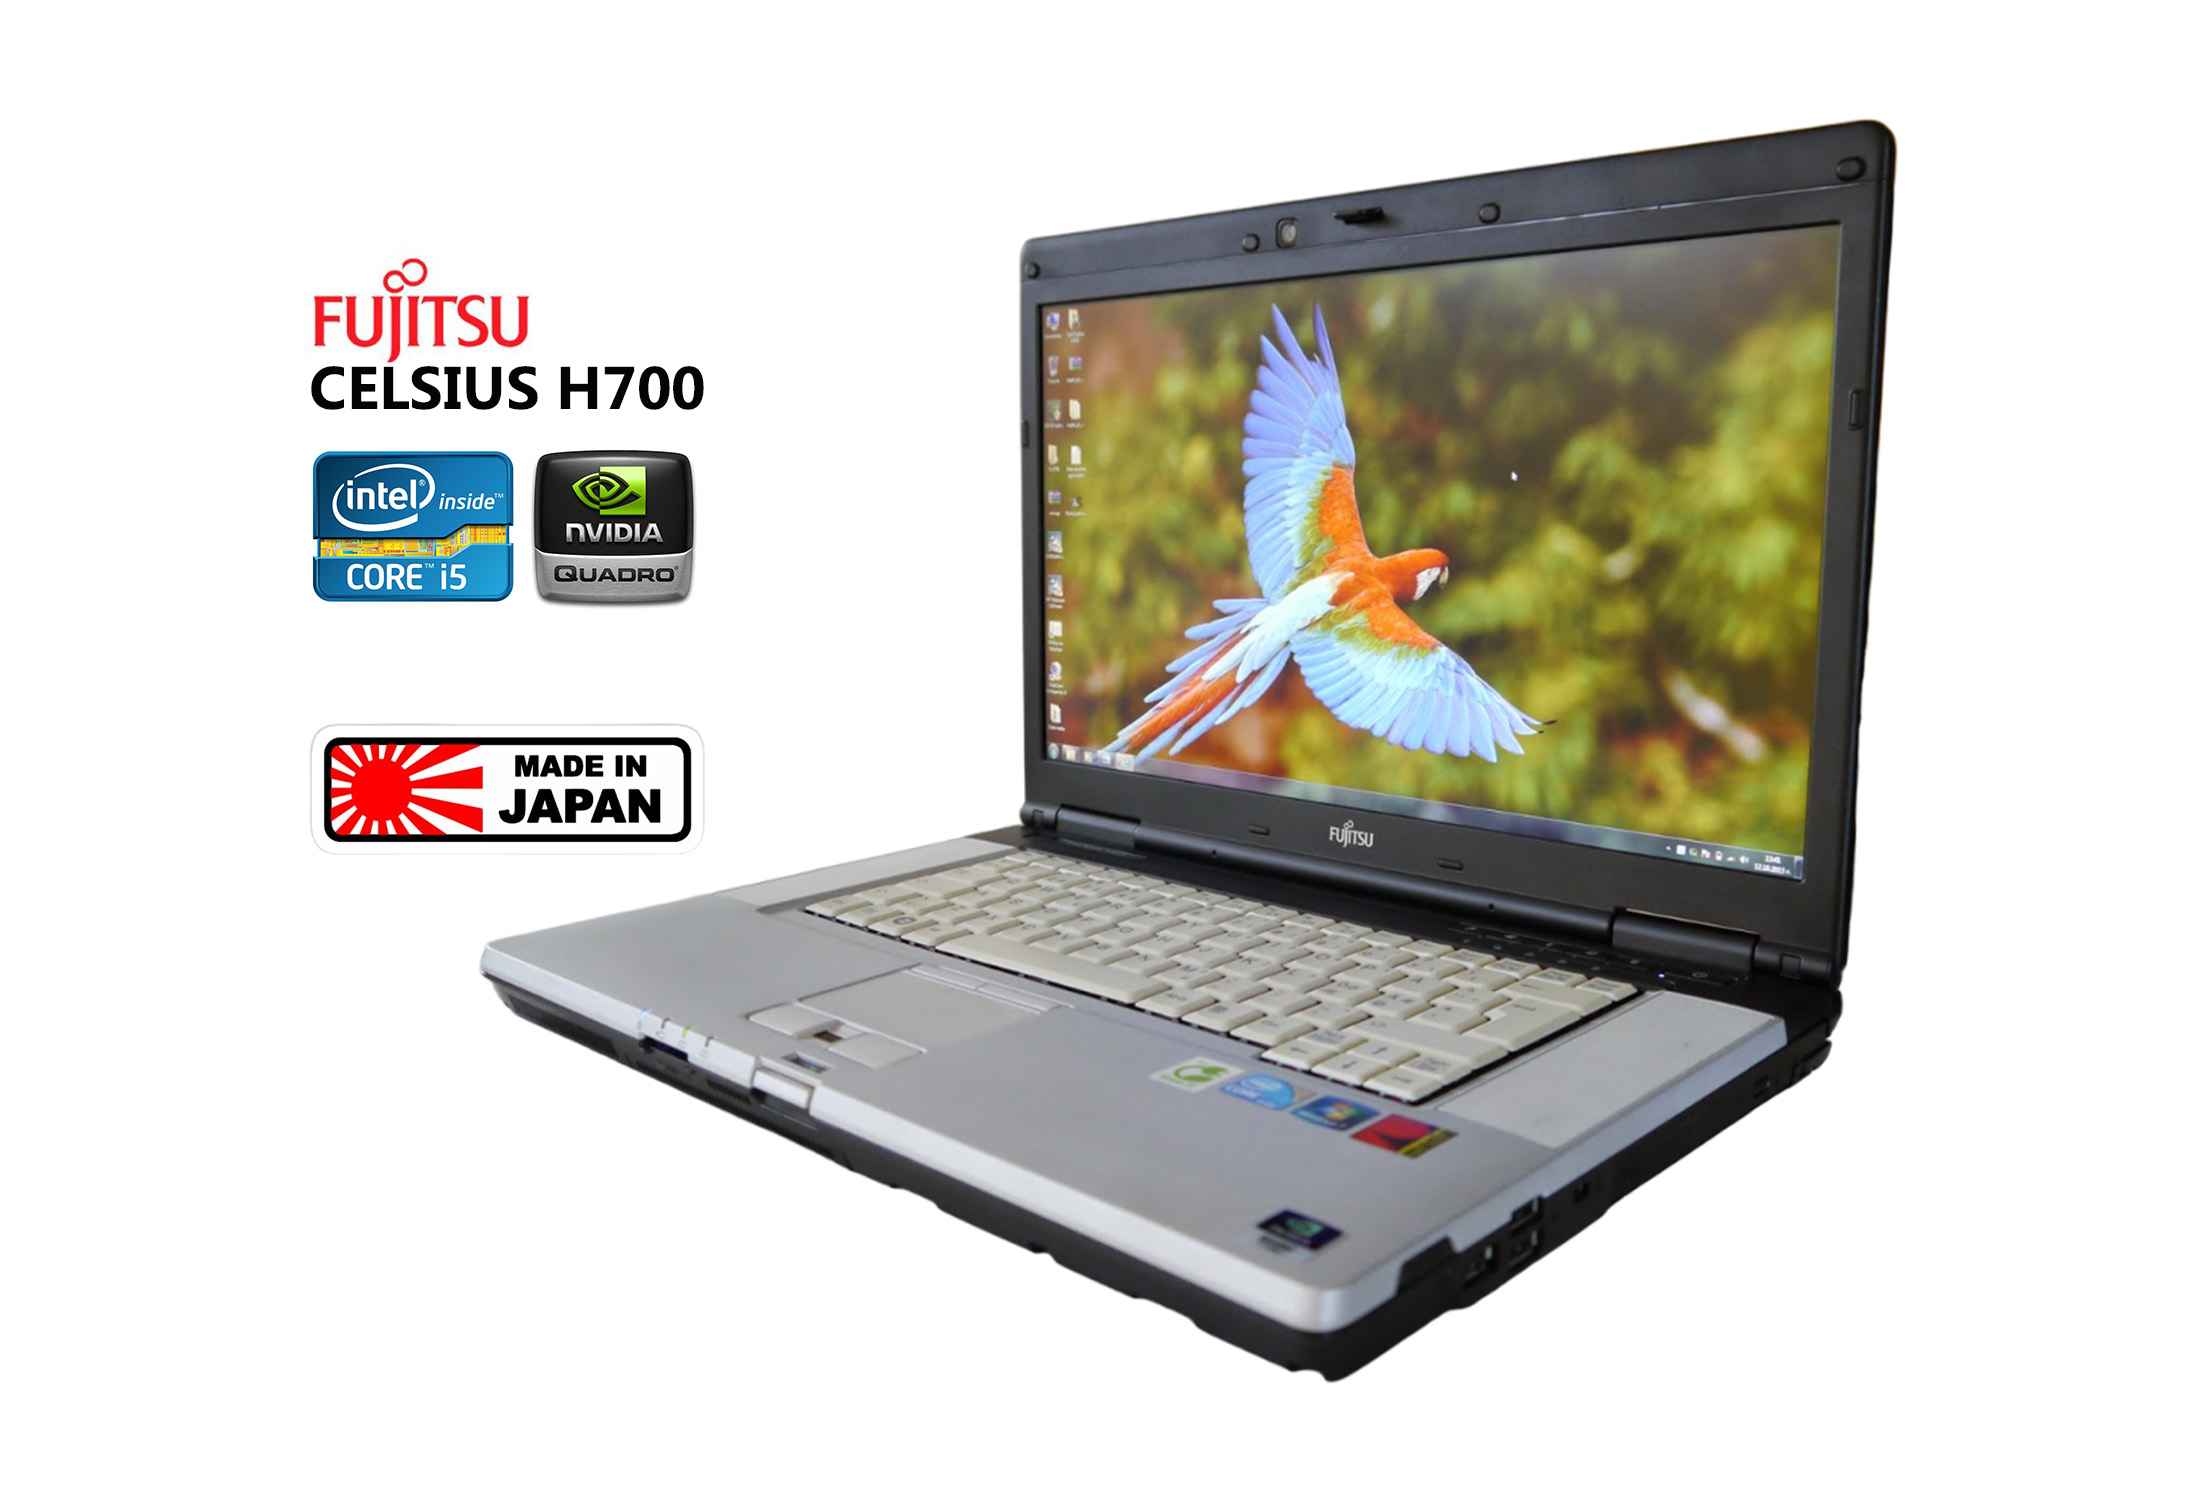 FUJITSU Celsius H700 i5-540M 6GB RAM  FHD Quadro FX880M Camera-MD7fI.jpeg